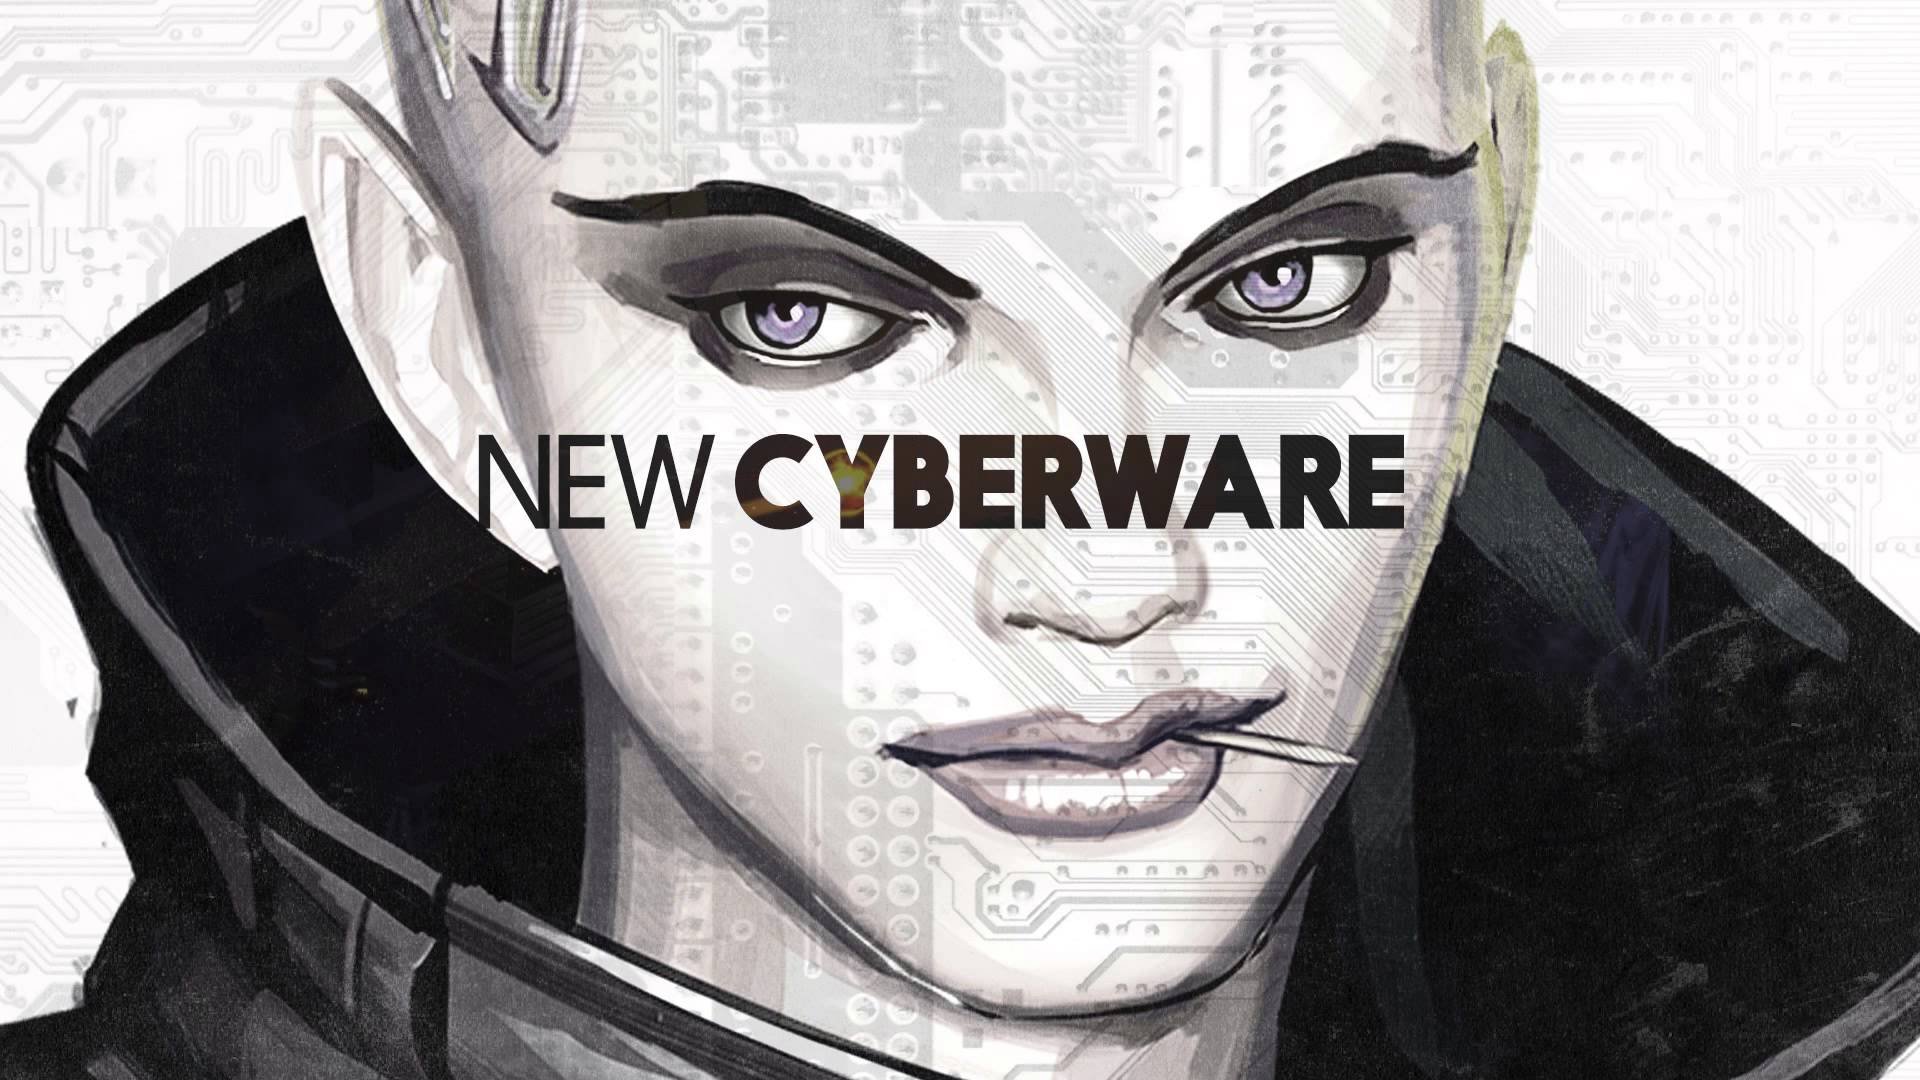 shadowrun, Cyberpunk, Sci fi, Fantasy, Mmo, Rpg, Online, Action, Fighting, Warrior, 1shadowr, Futuristic, Poster Wallpaper